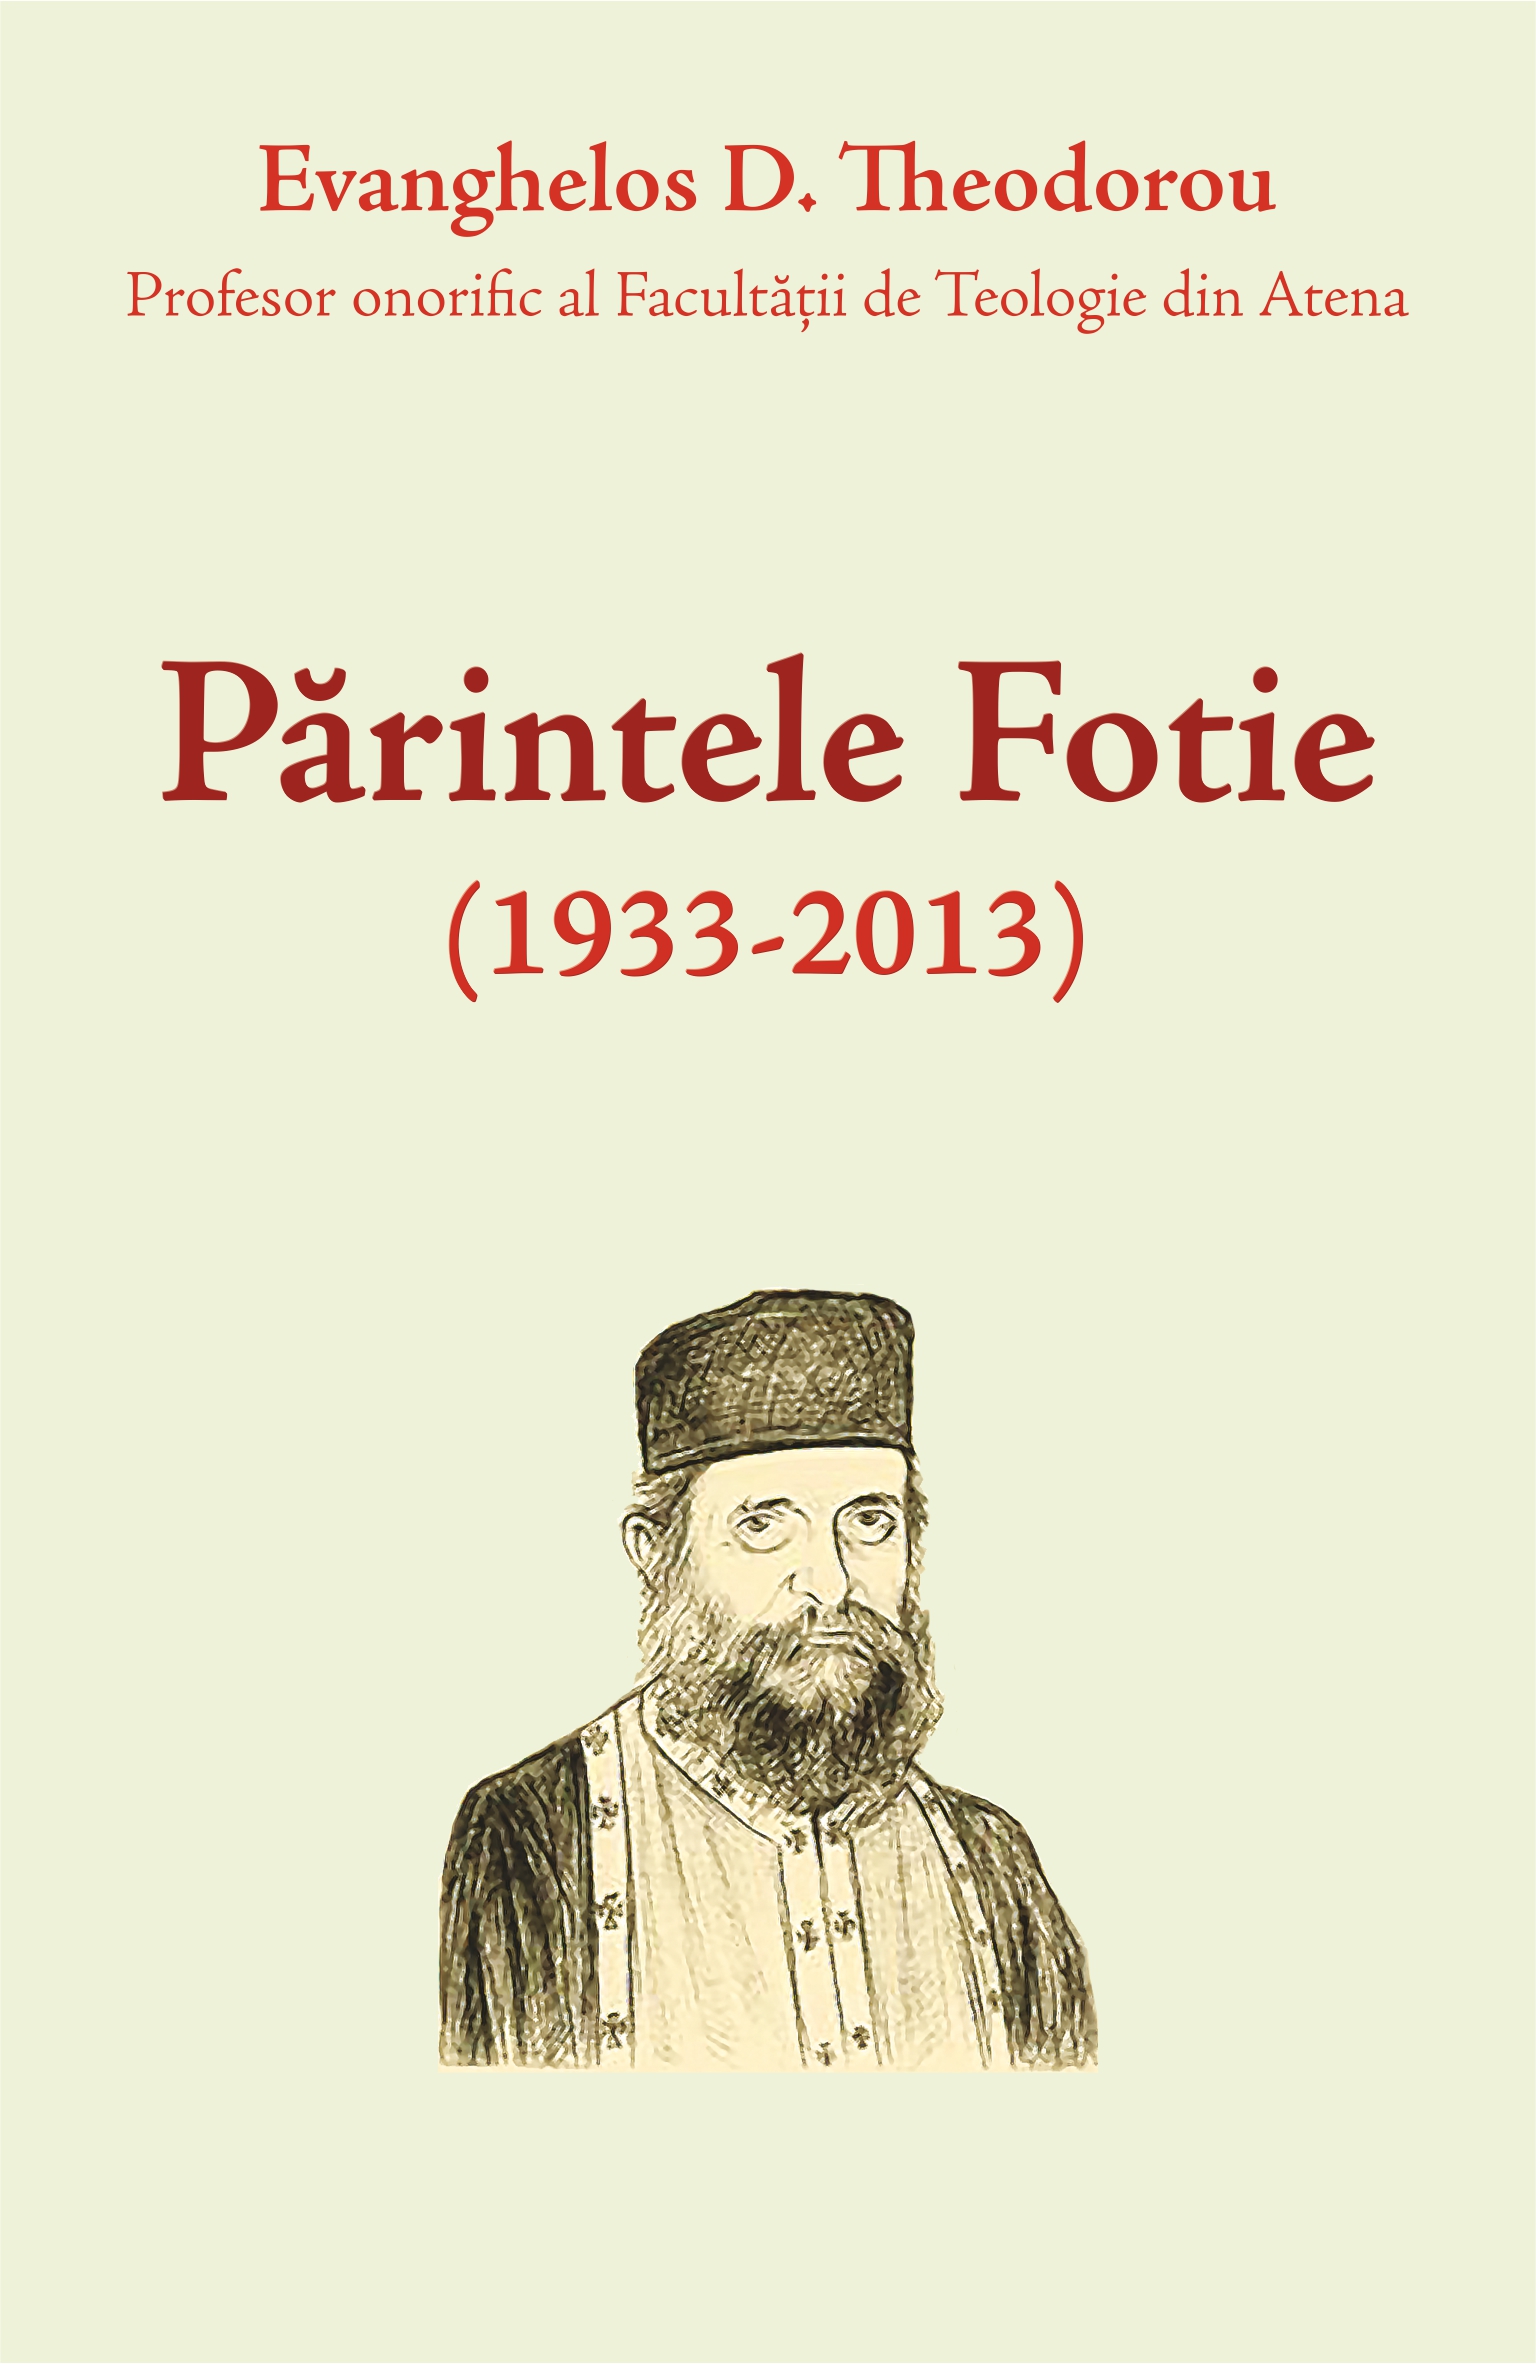 Parintele Fotie (1933-2013) - Evanghelos D. Theodorou